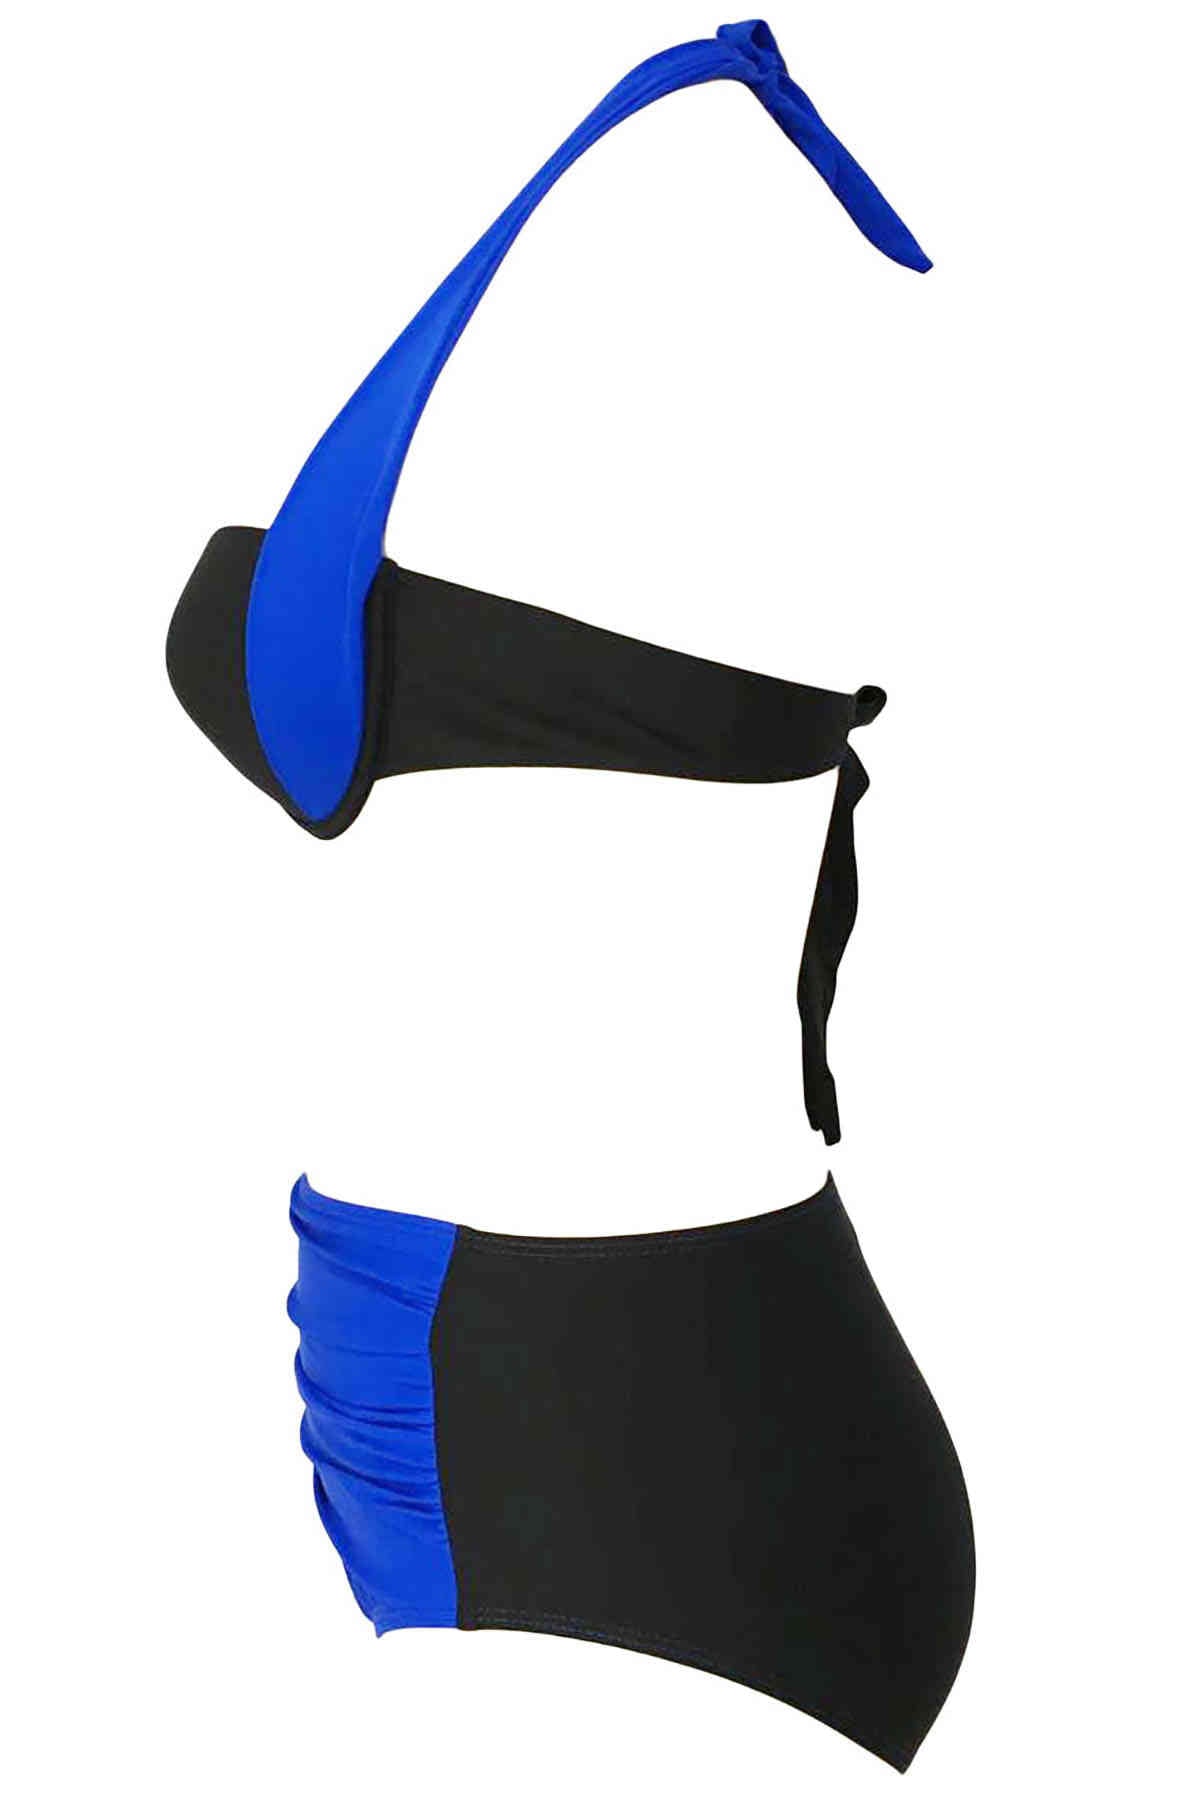 Blue Black High Waist Bikini Set Women Swimwear Swimsuit